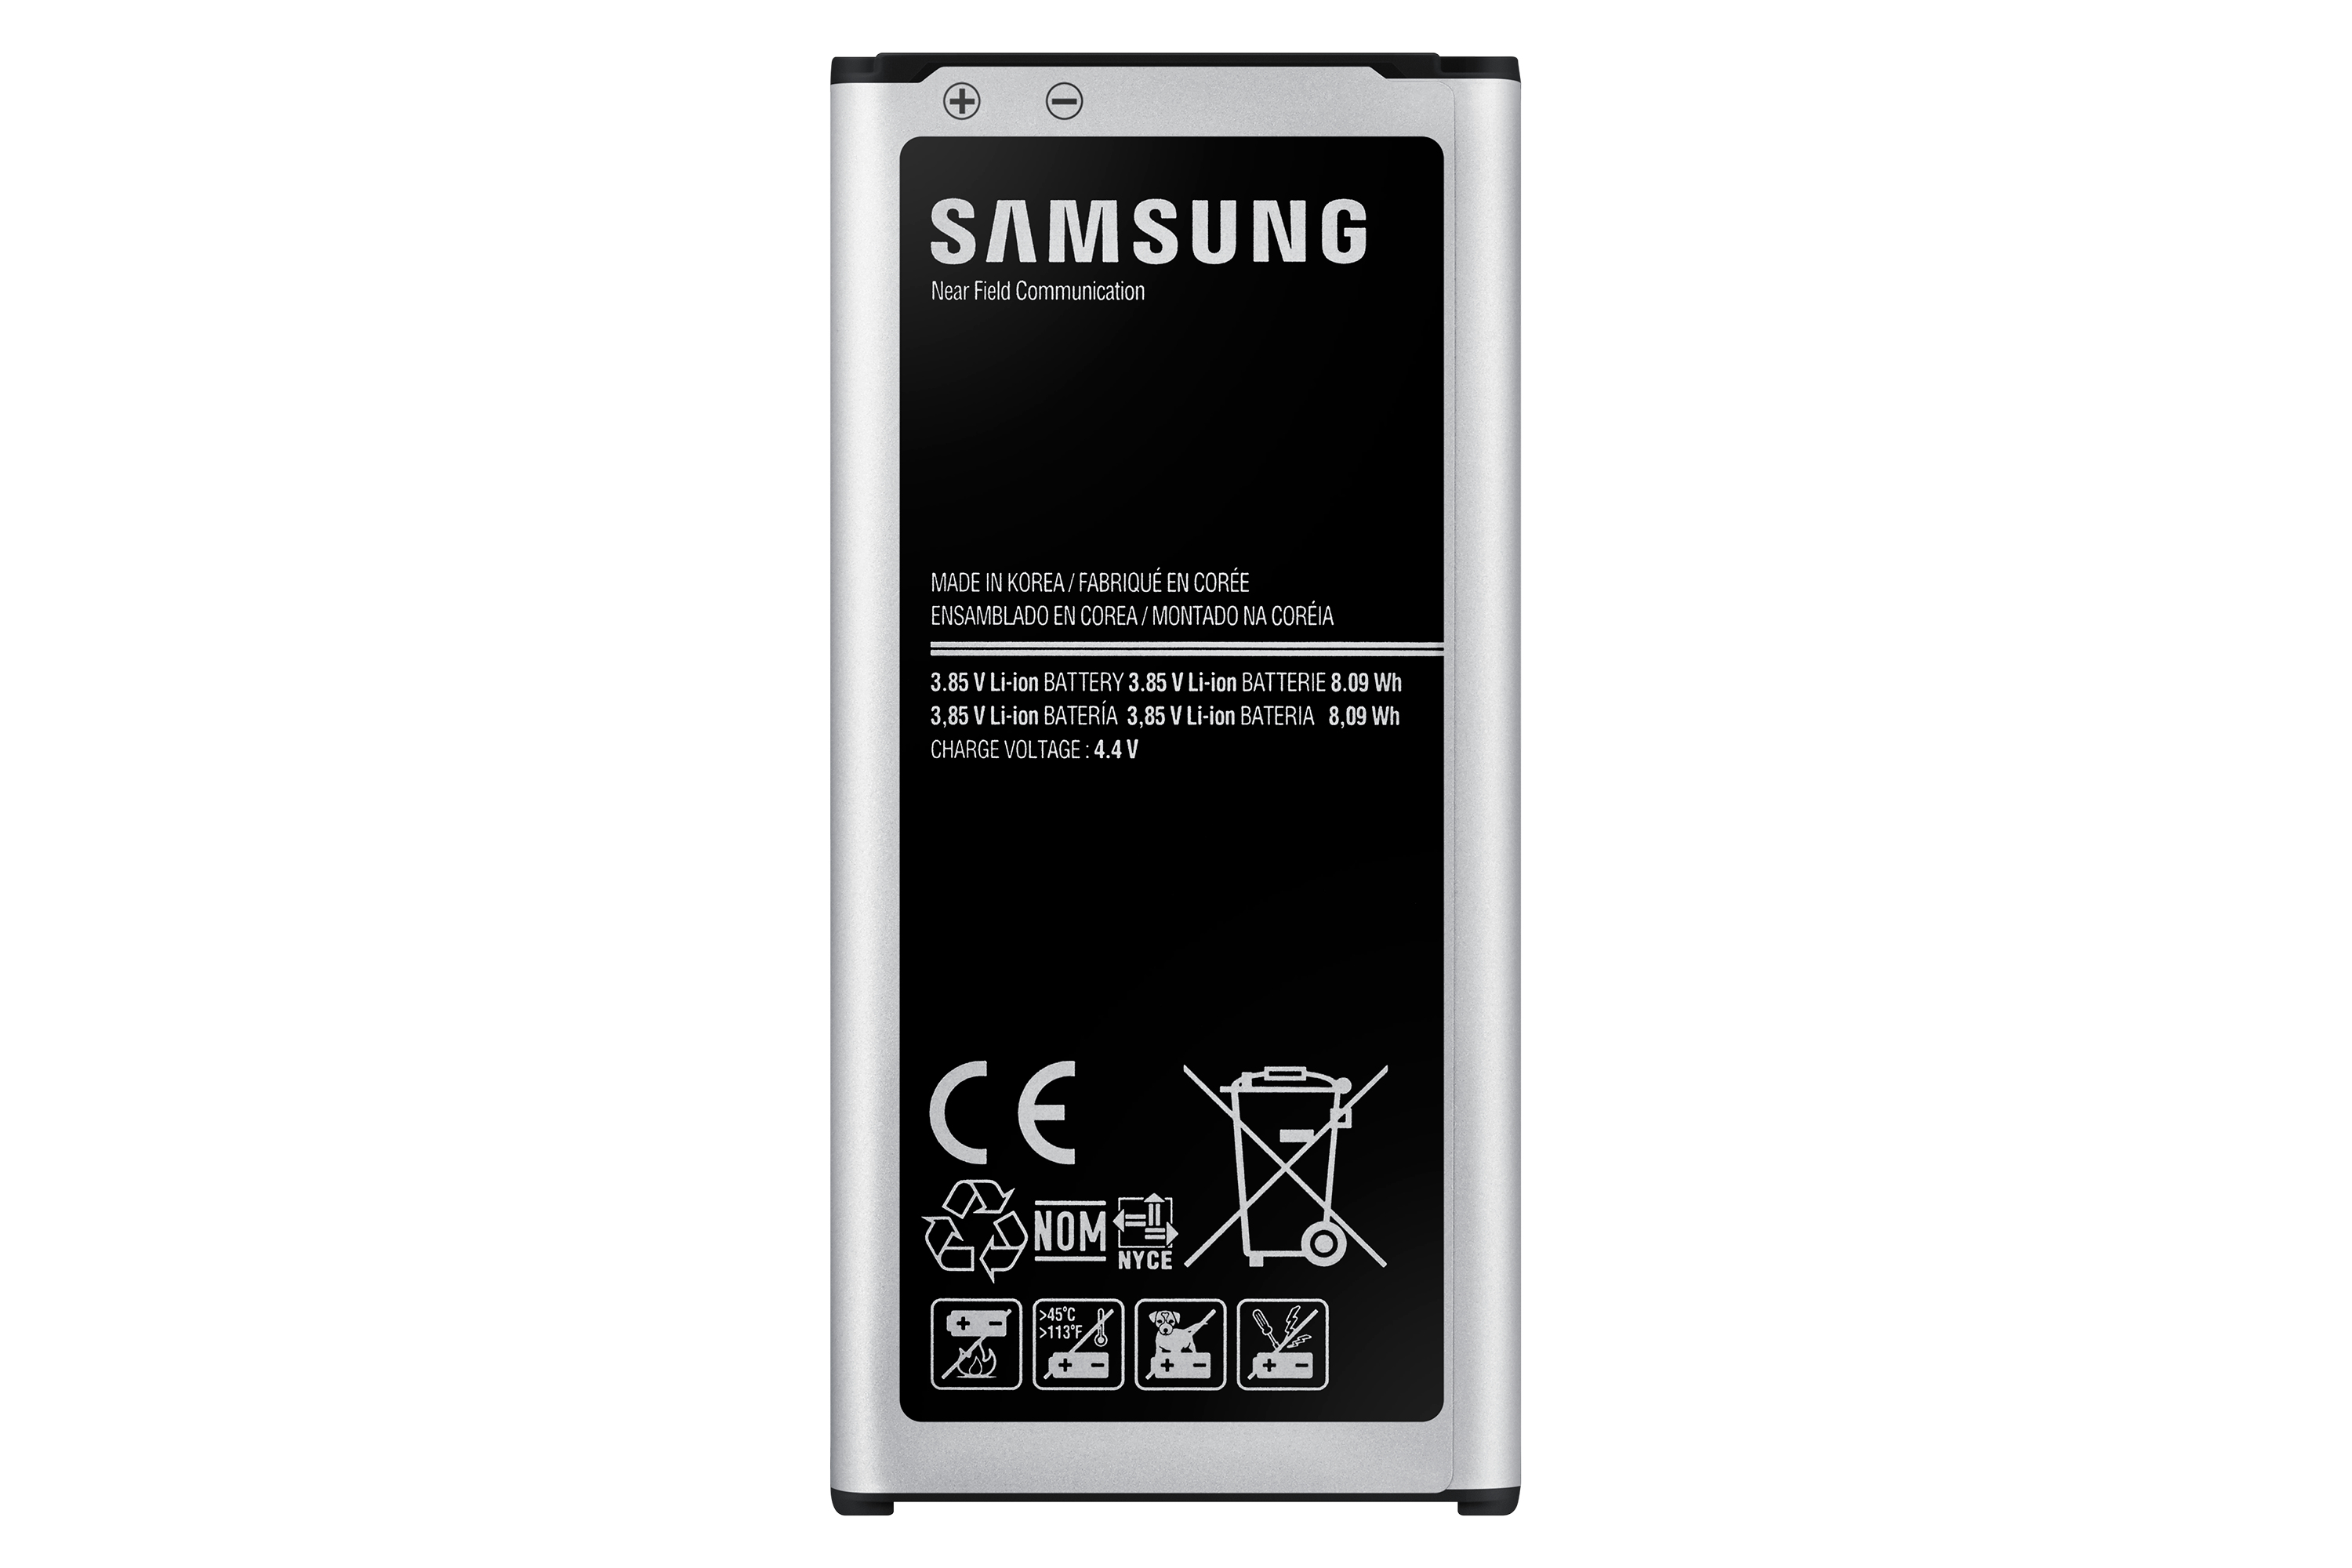 Samsung EB-BG800B Svart, Silver